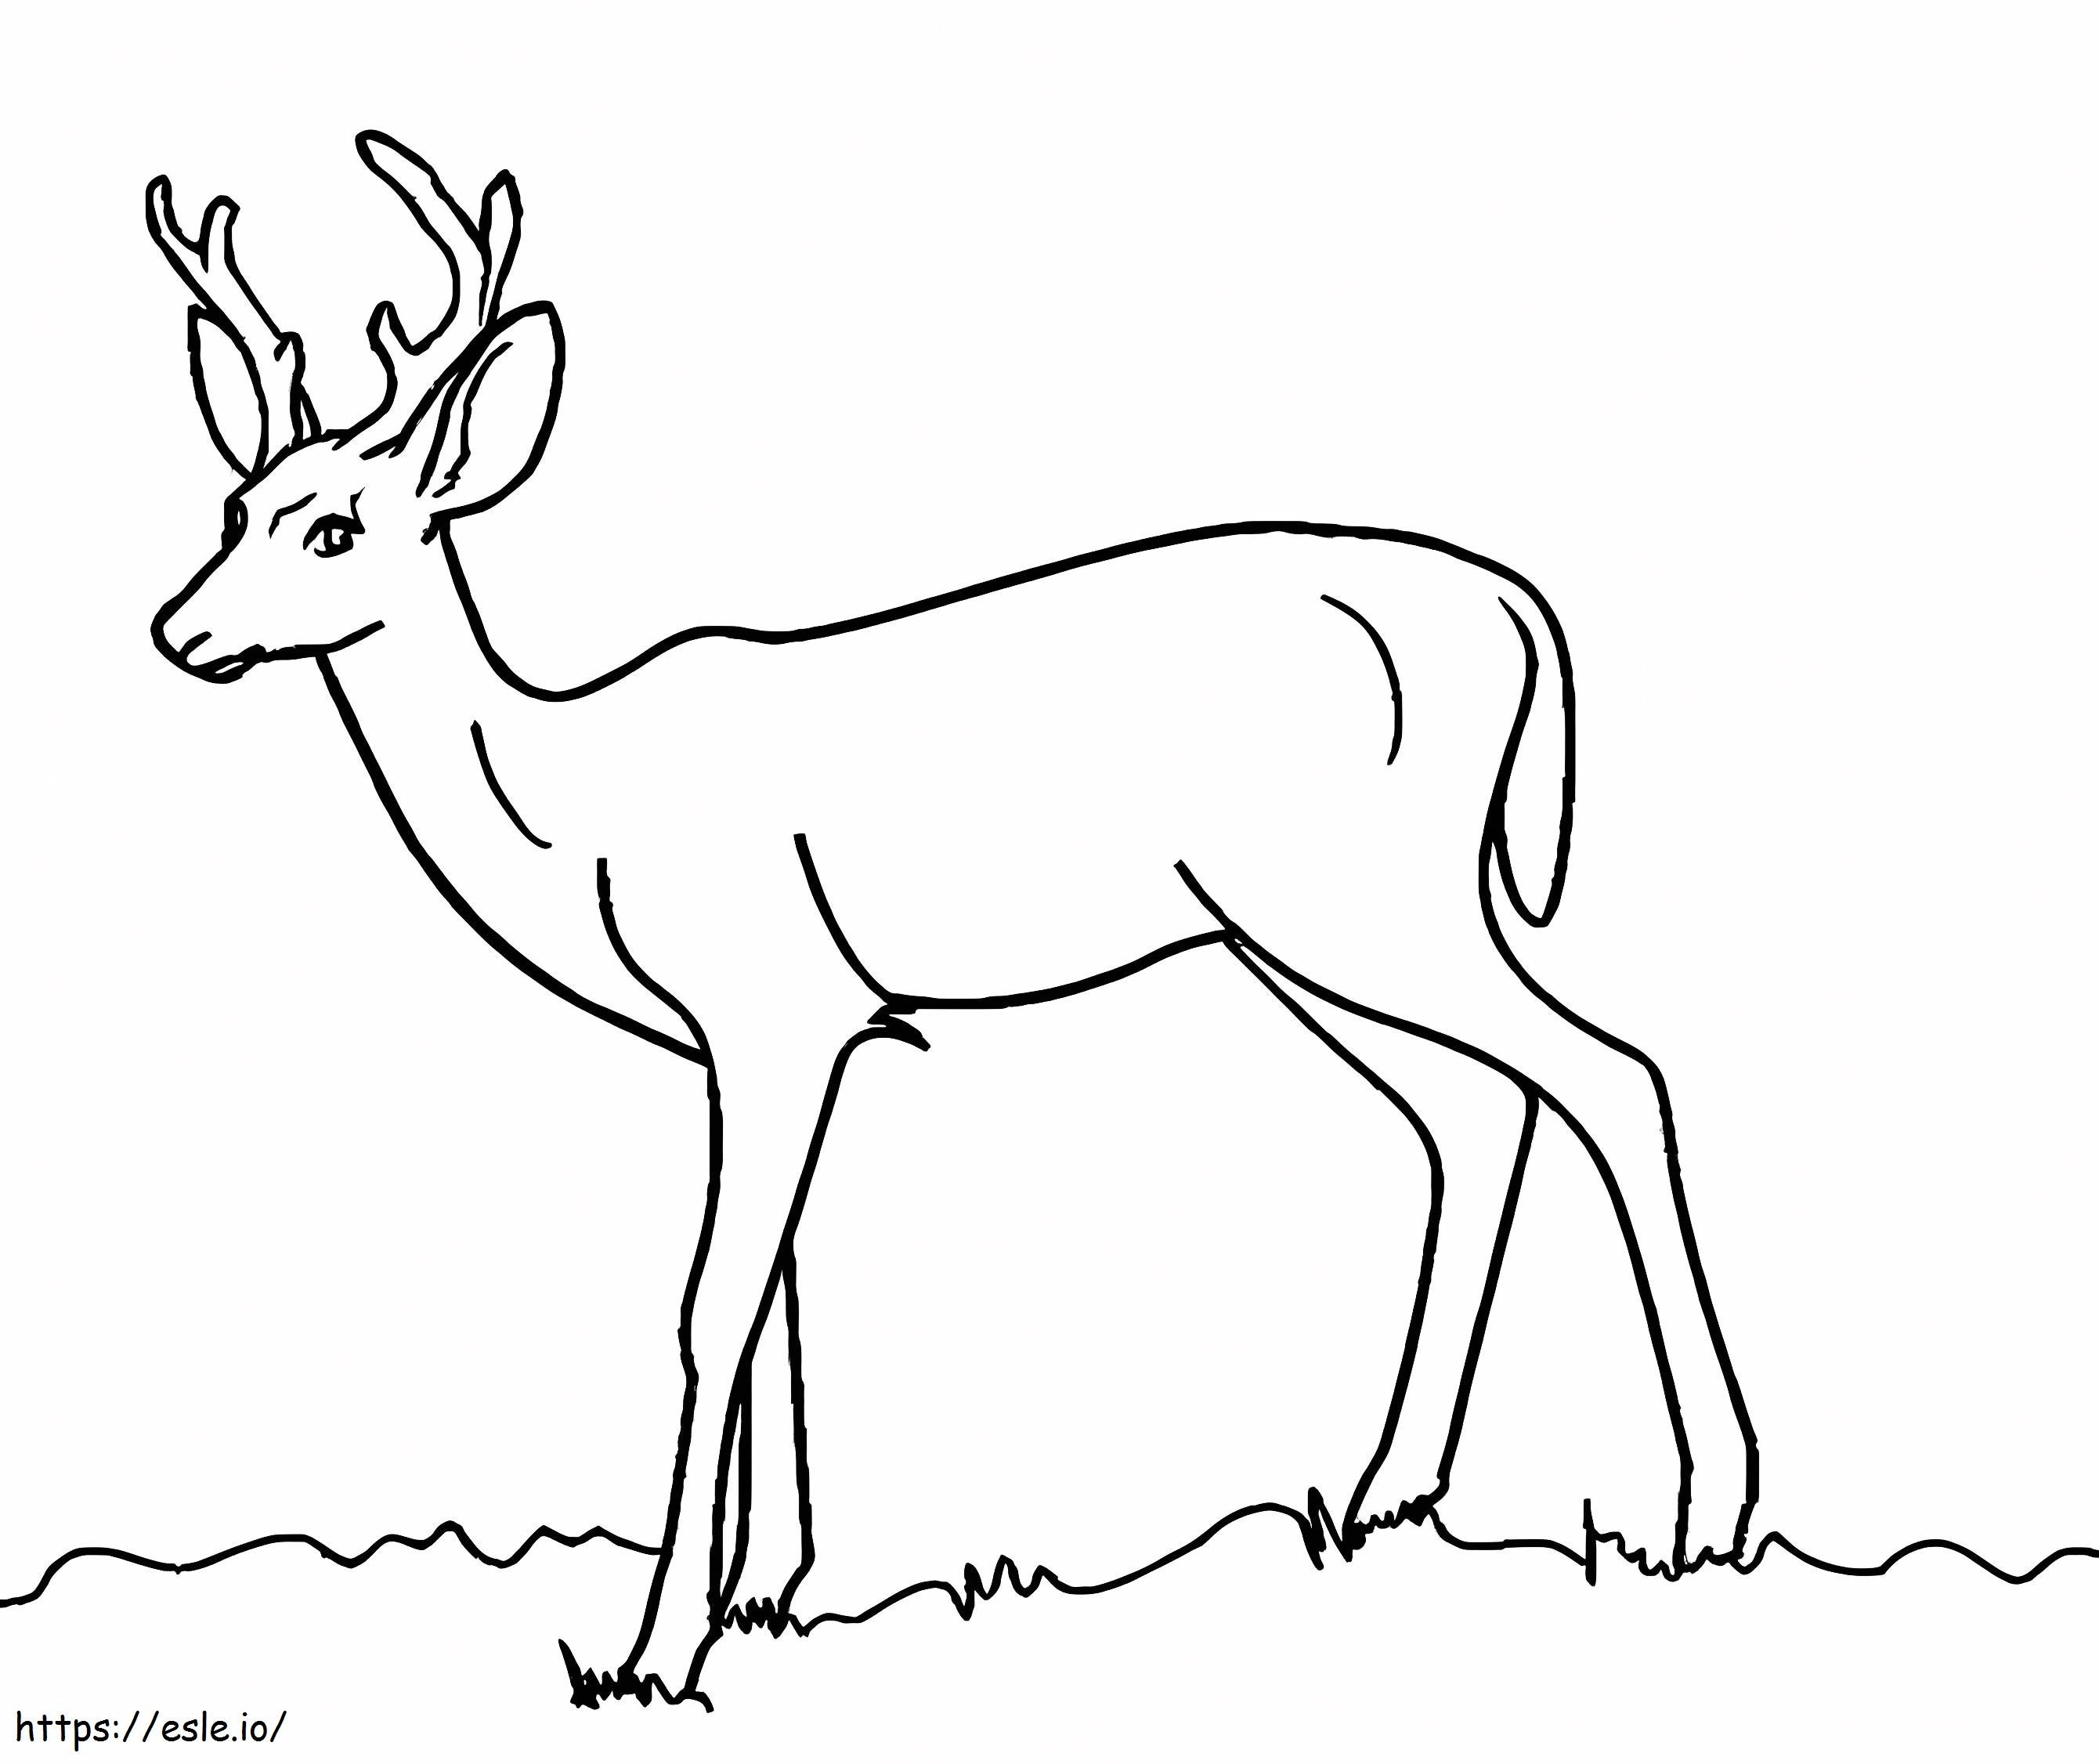 Coloriage Cerf sauvage 5 à imprimer dessin